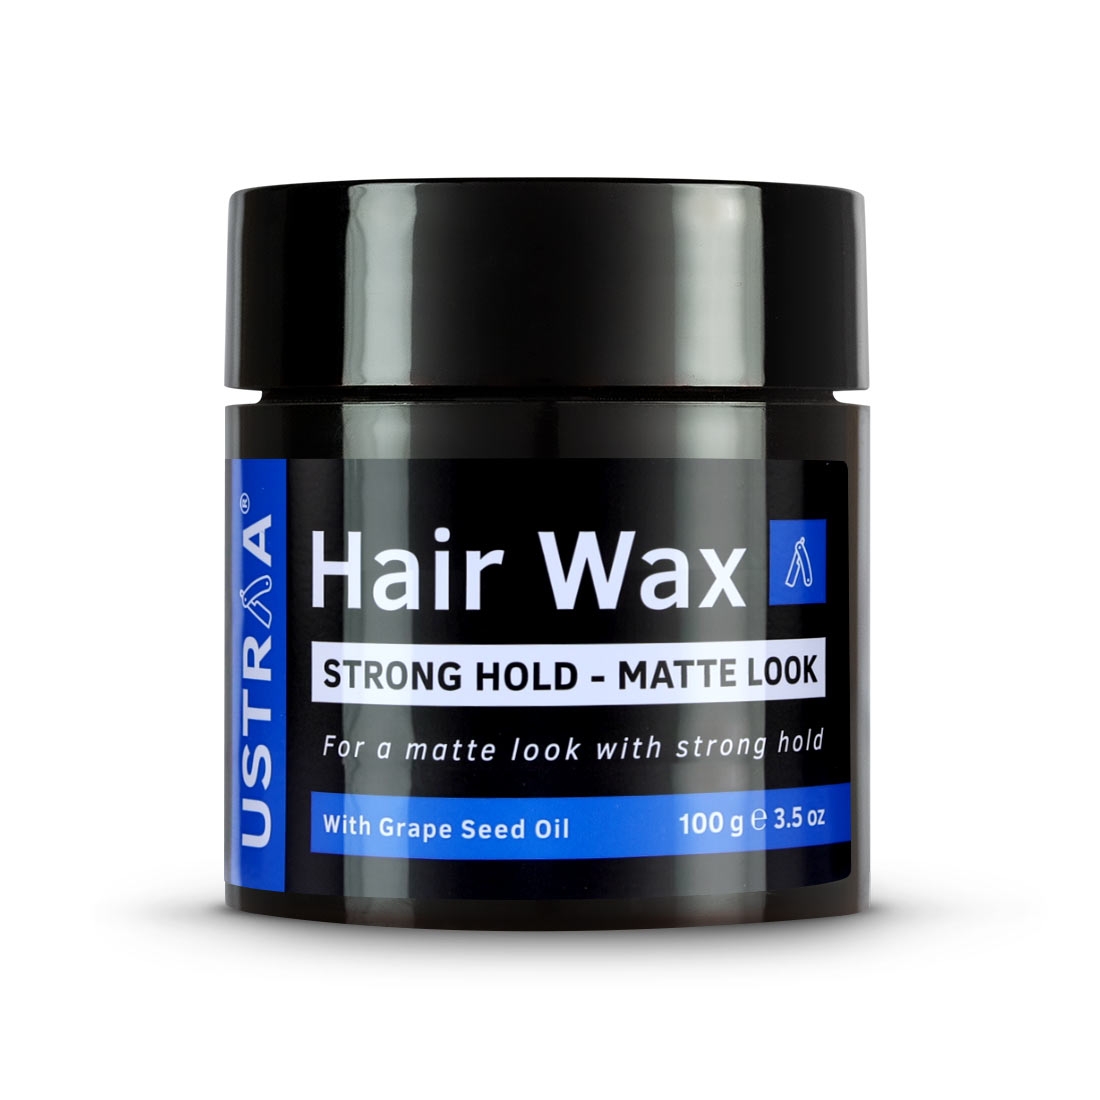 Hair Wax - Strong Hold - Matte Look 100g